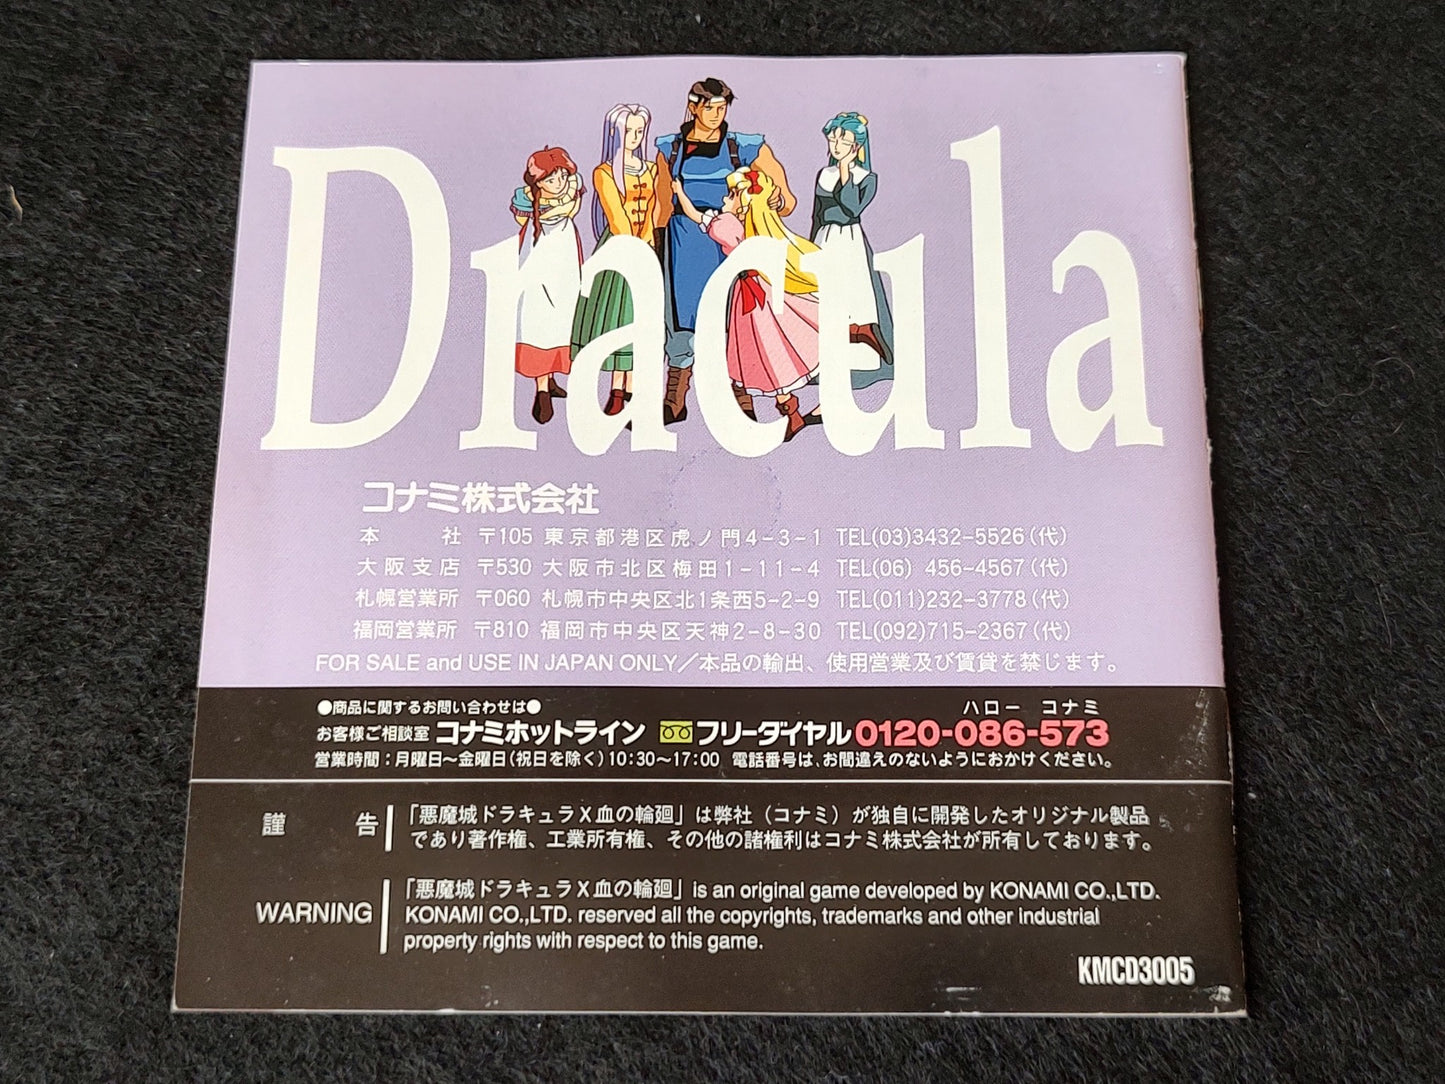 Akumajou Dracula X Chi no Rondo Castlevania PC Engine CD-ROM2, Working-f0520-